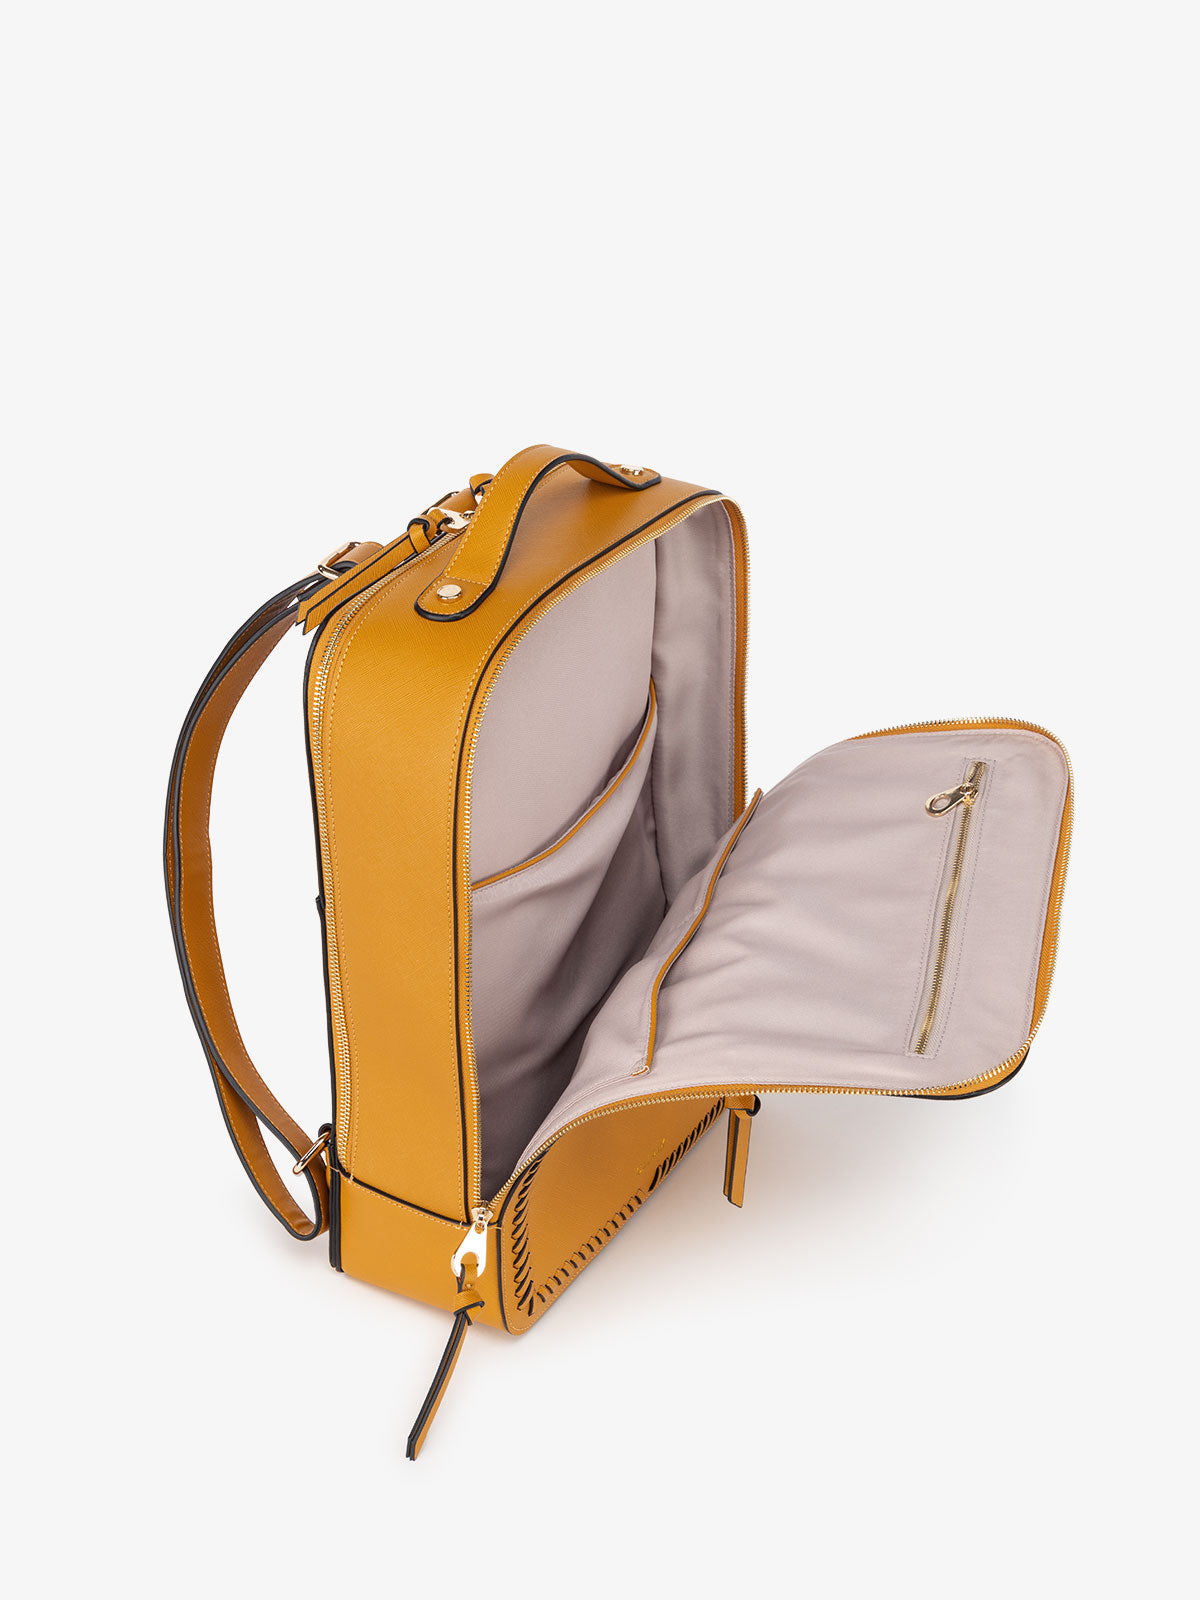 CALPAK Kaya backpack with laptop compartment